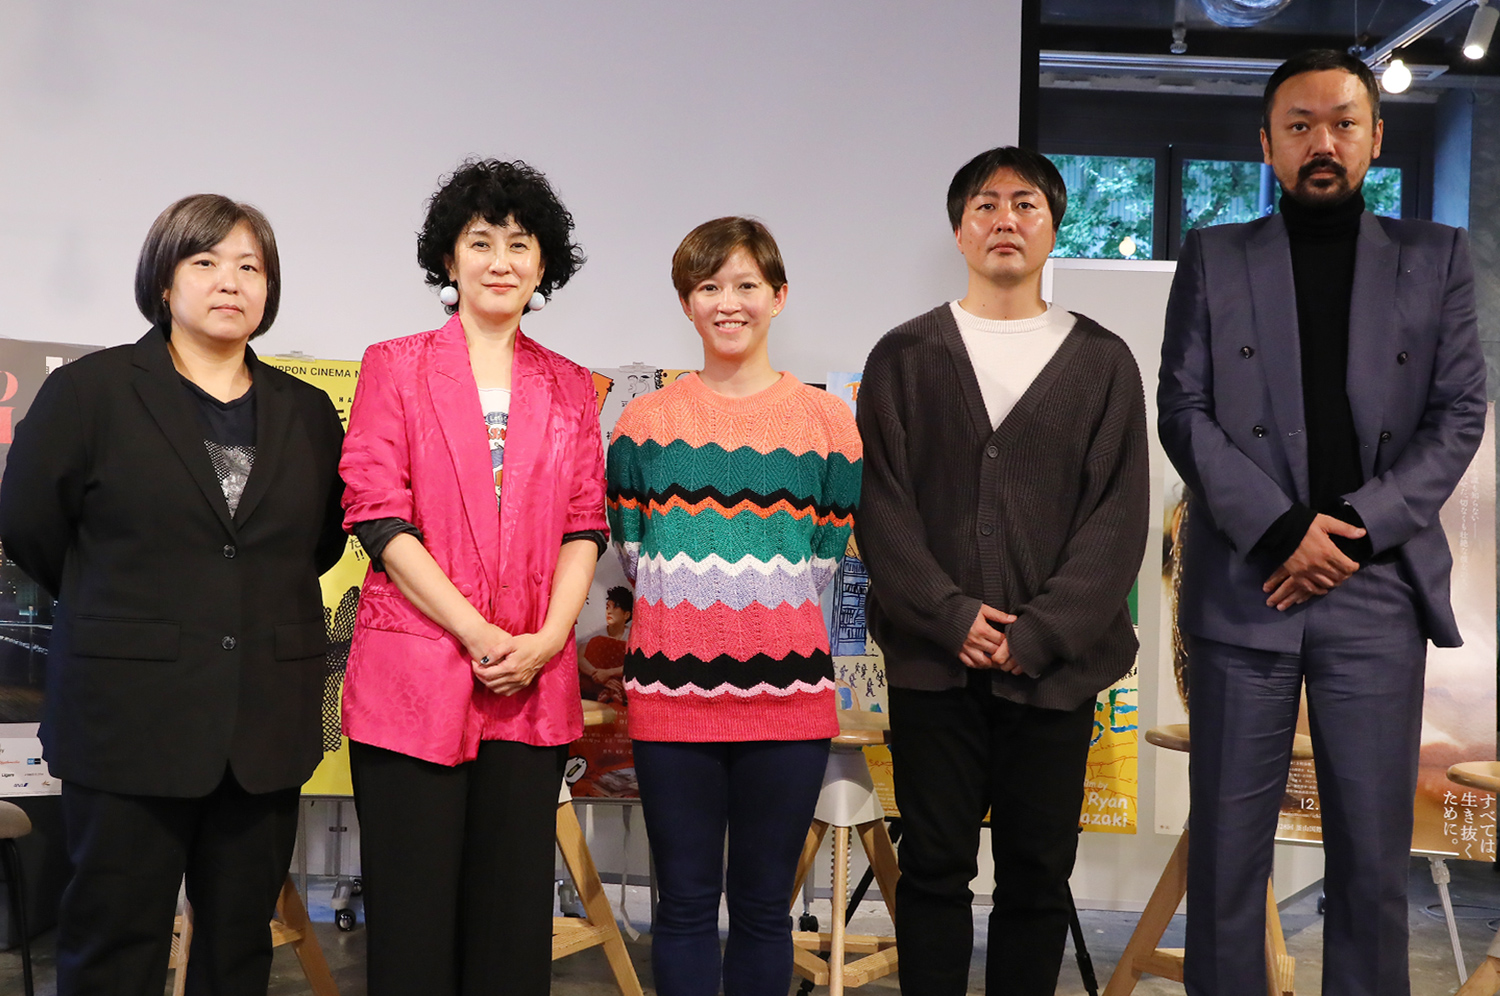 Nippon Cinema Now Talk Session: How we make films（TALK）